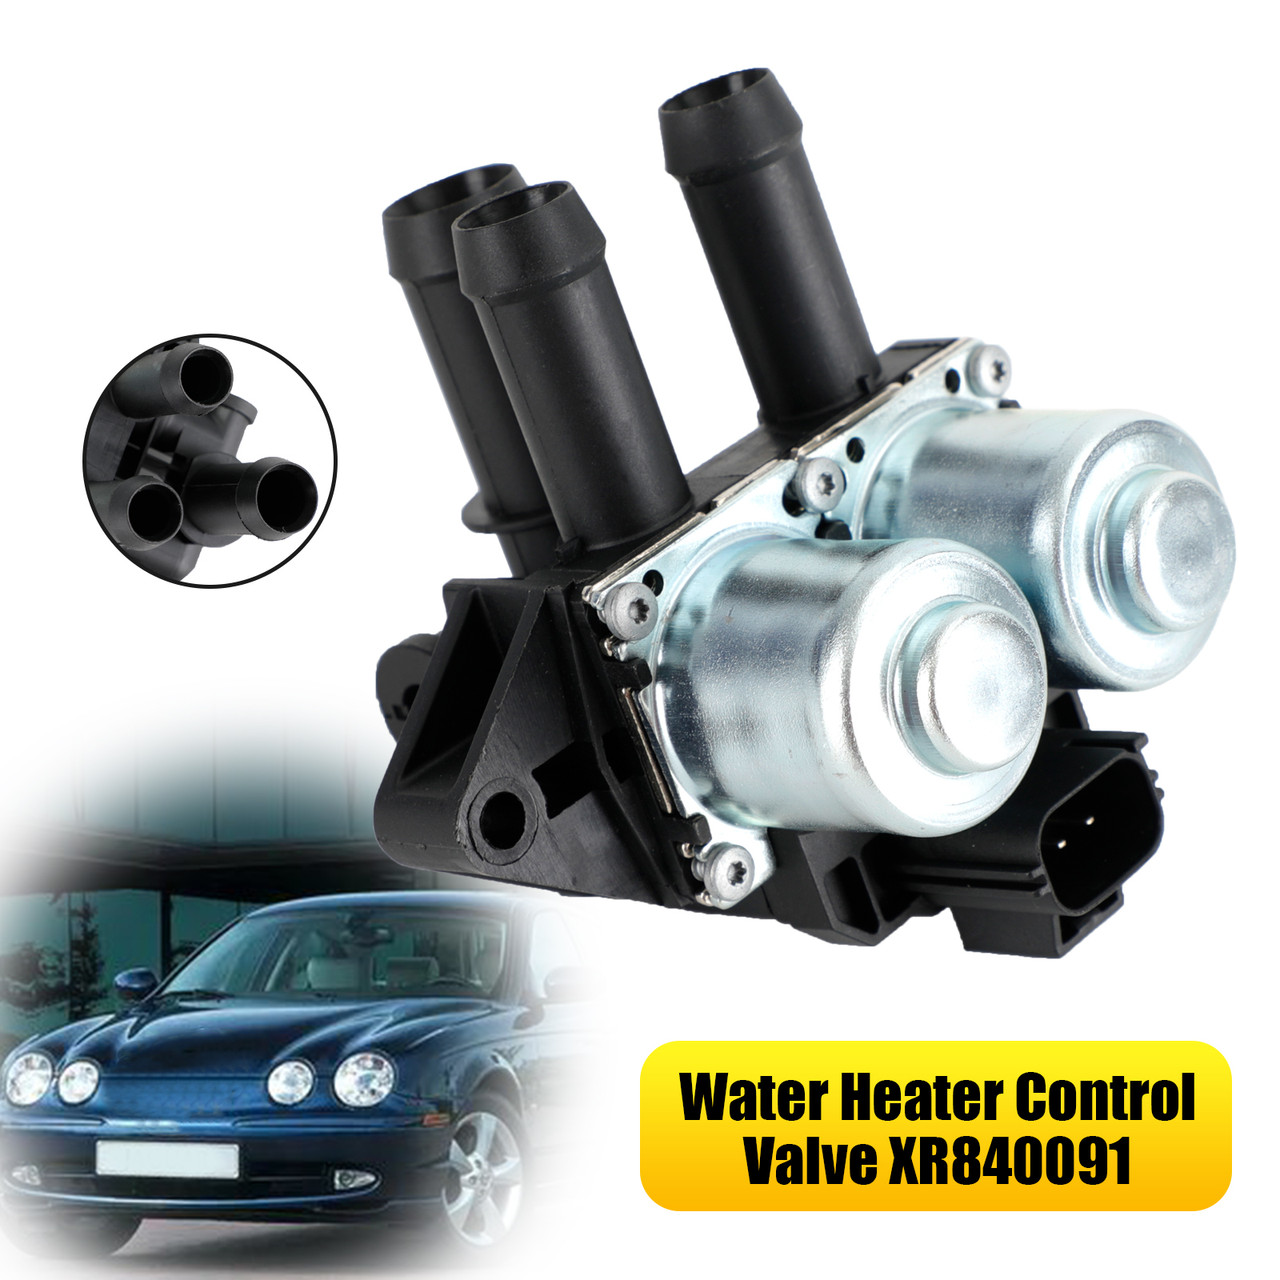 Water Heater Control Valve XR840091 For Jaguar S-type 2.5 3.0 Petrol 2002-2008